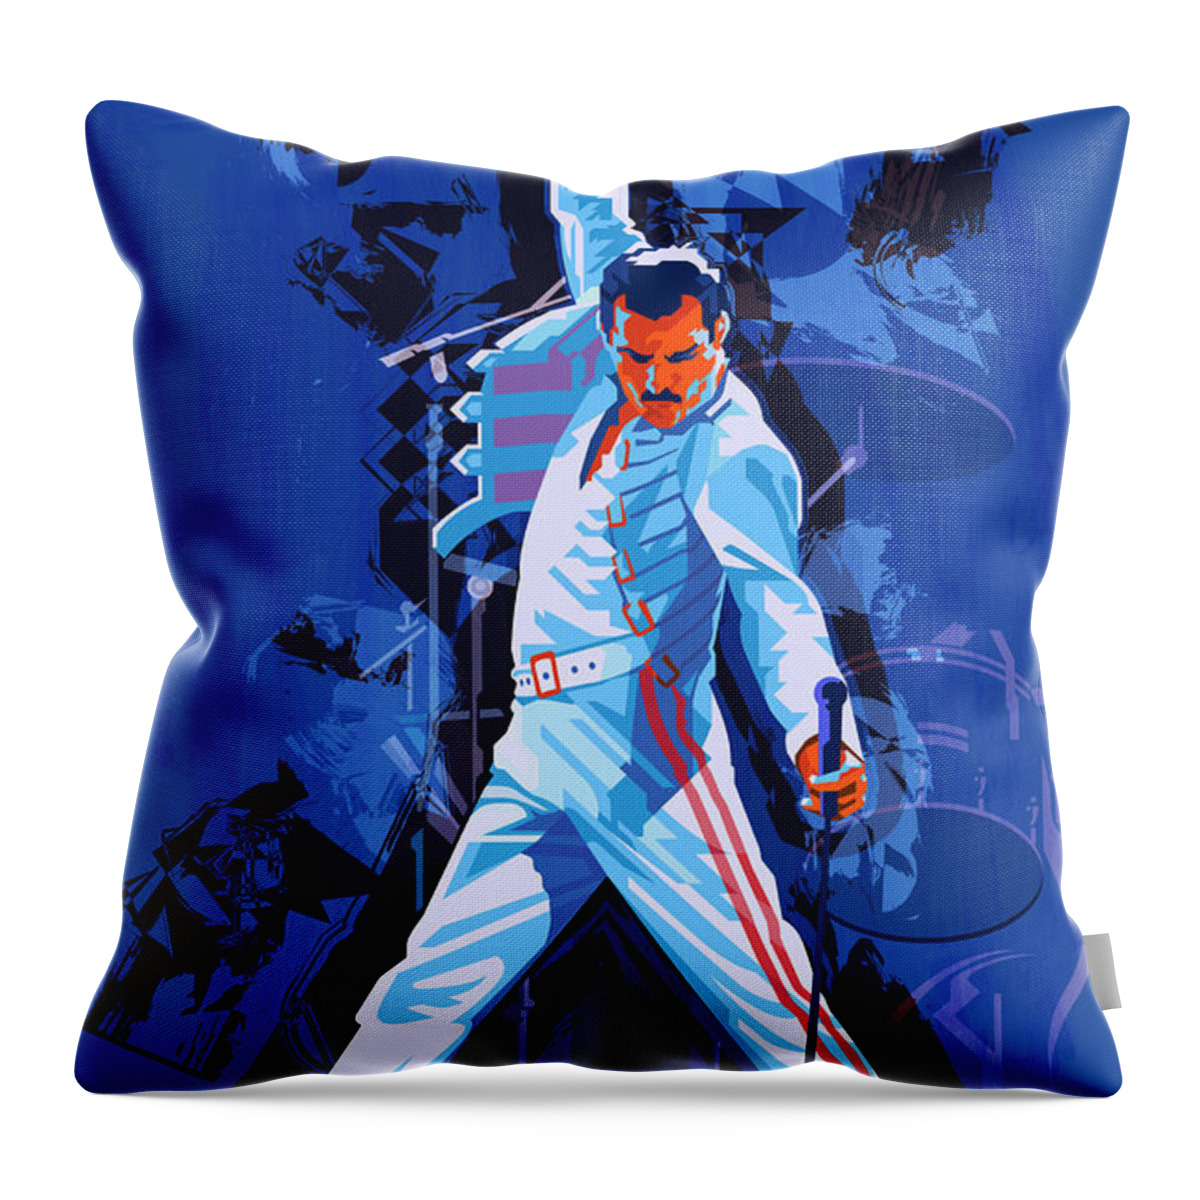 Freddie Mercury Illustration Throw Pillow featuring the digital art Freddie Mercury Illustration by Garth Glazier